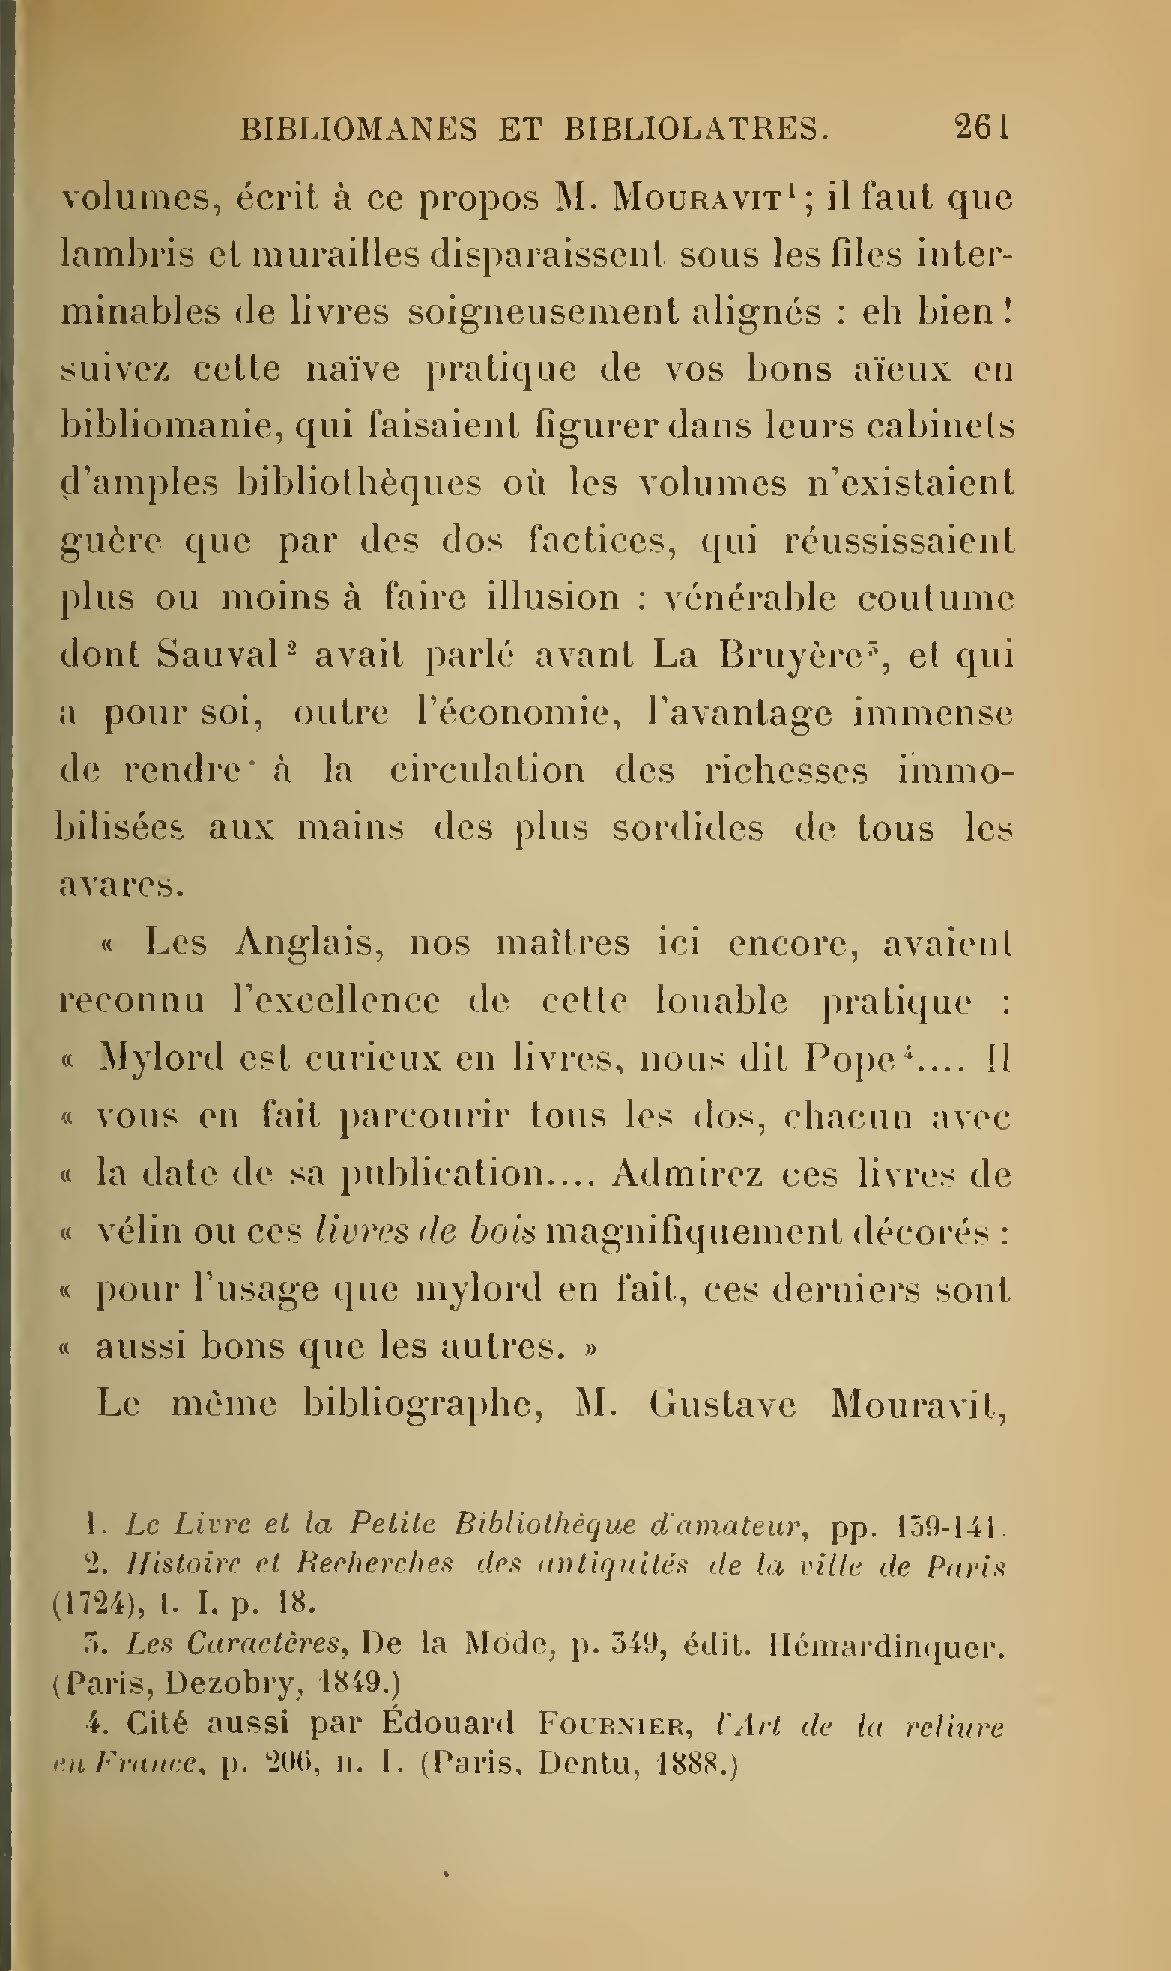 Albert Cim, Le Livre, t. II, p. 261.